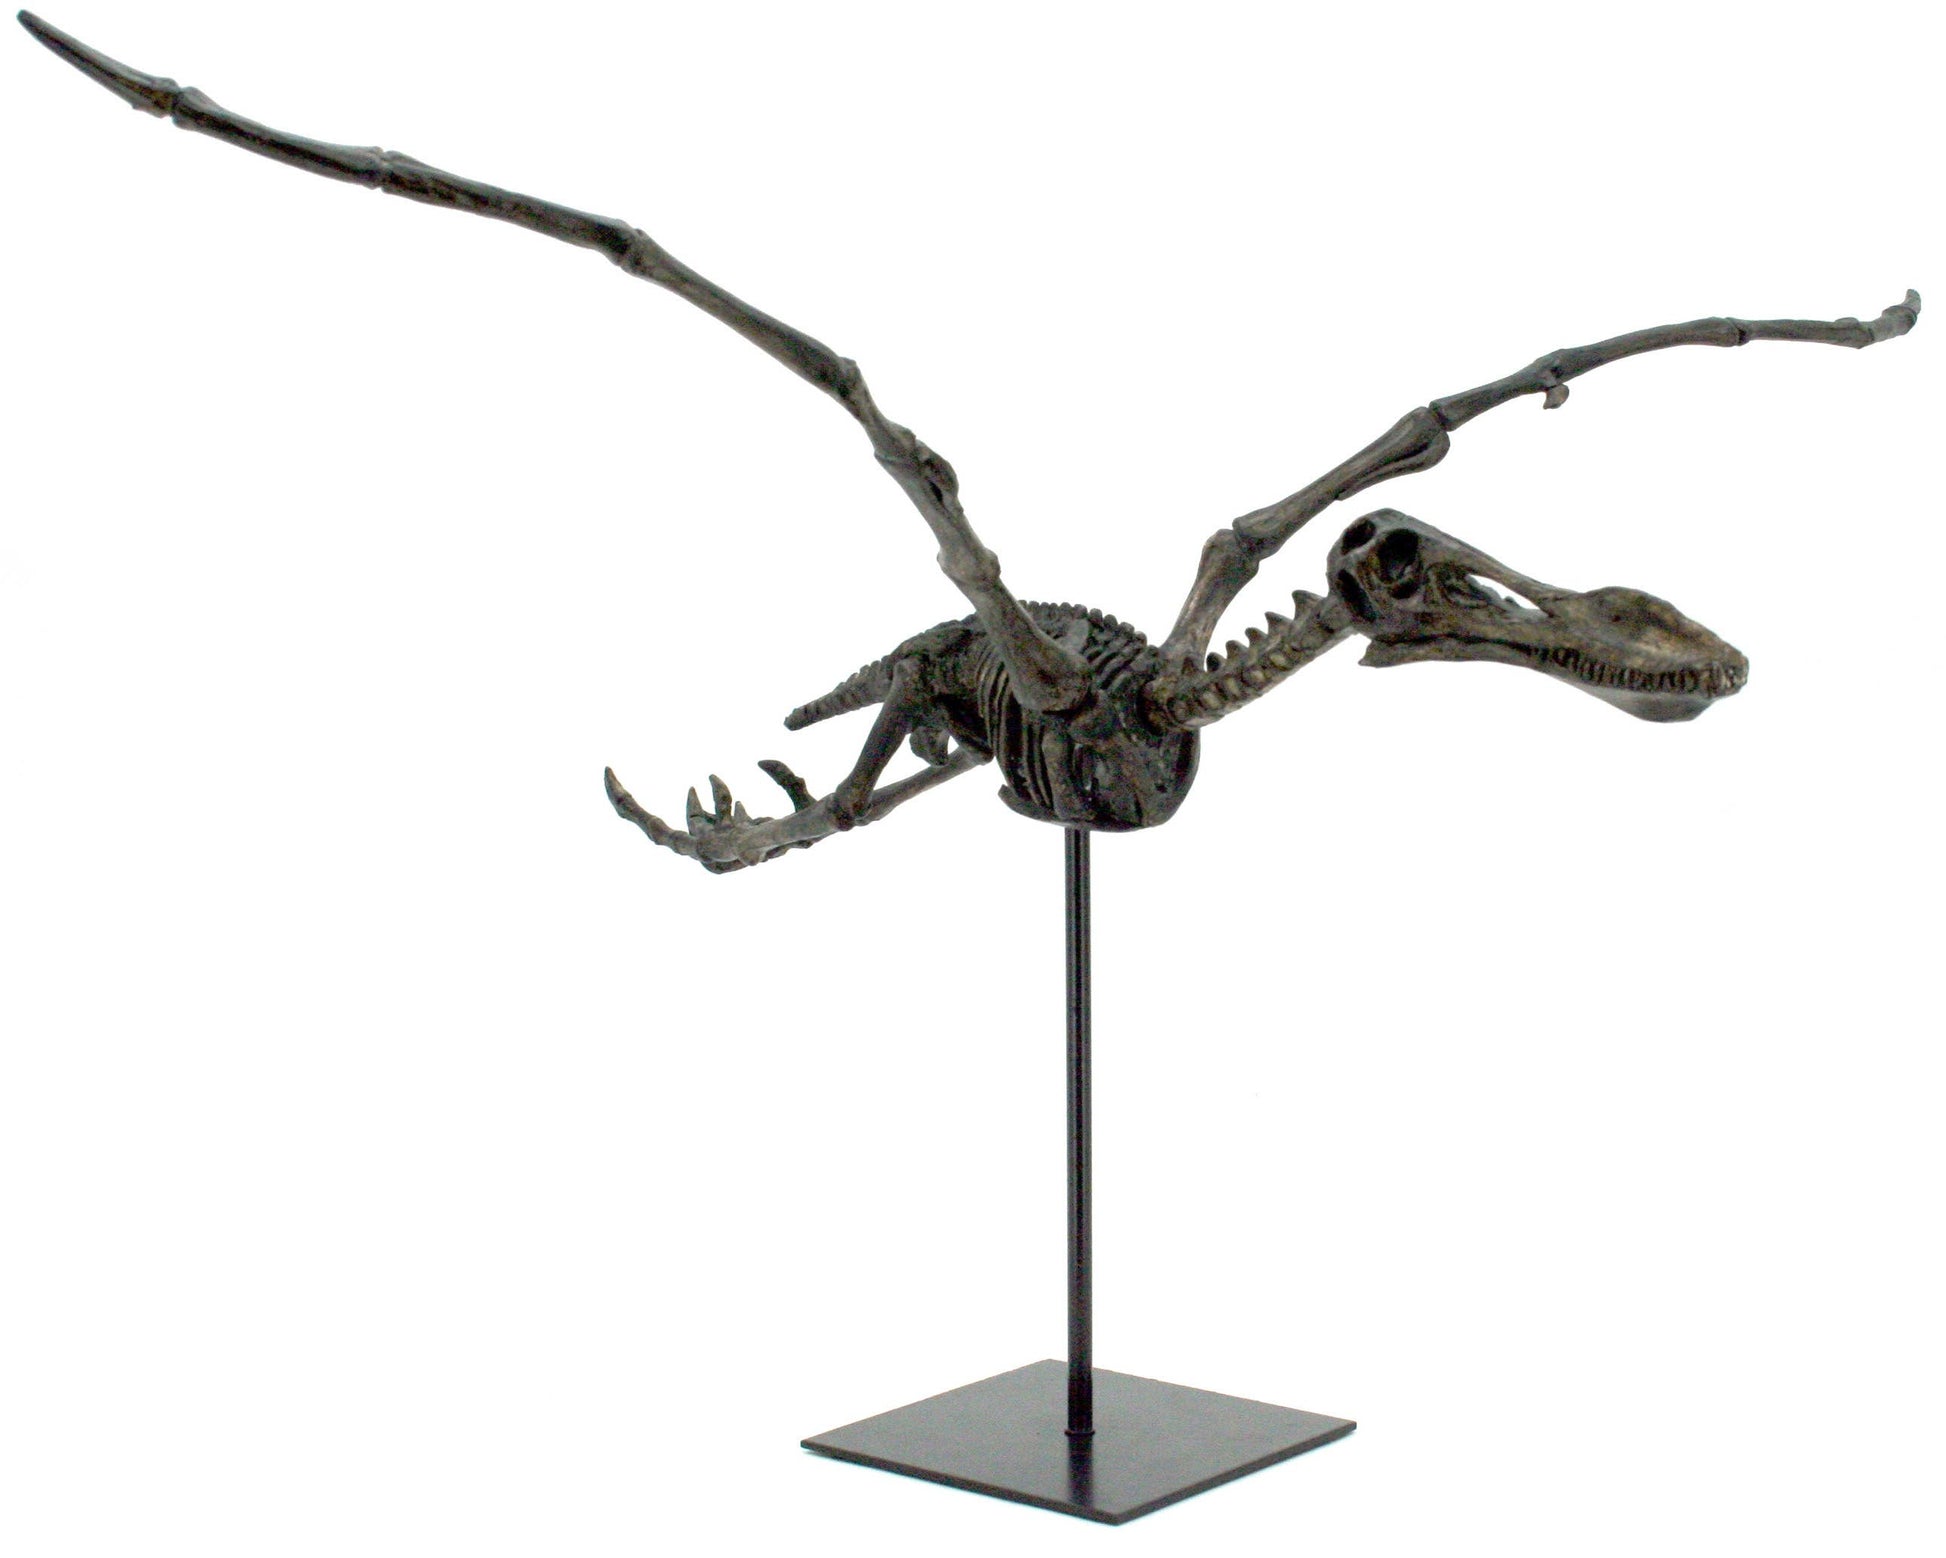 Replica Flying Pterosaur Dinosaur Fossil Trophy - Stemcell Science Shop